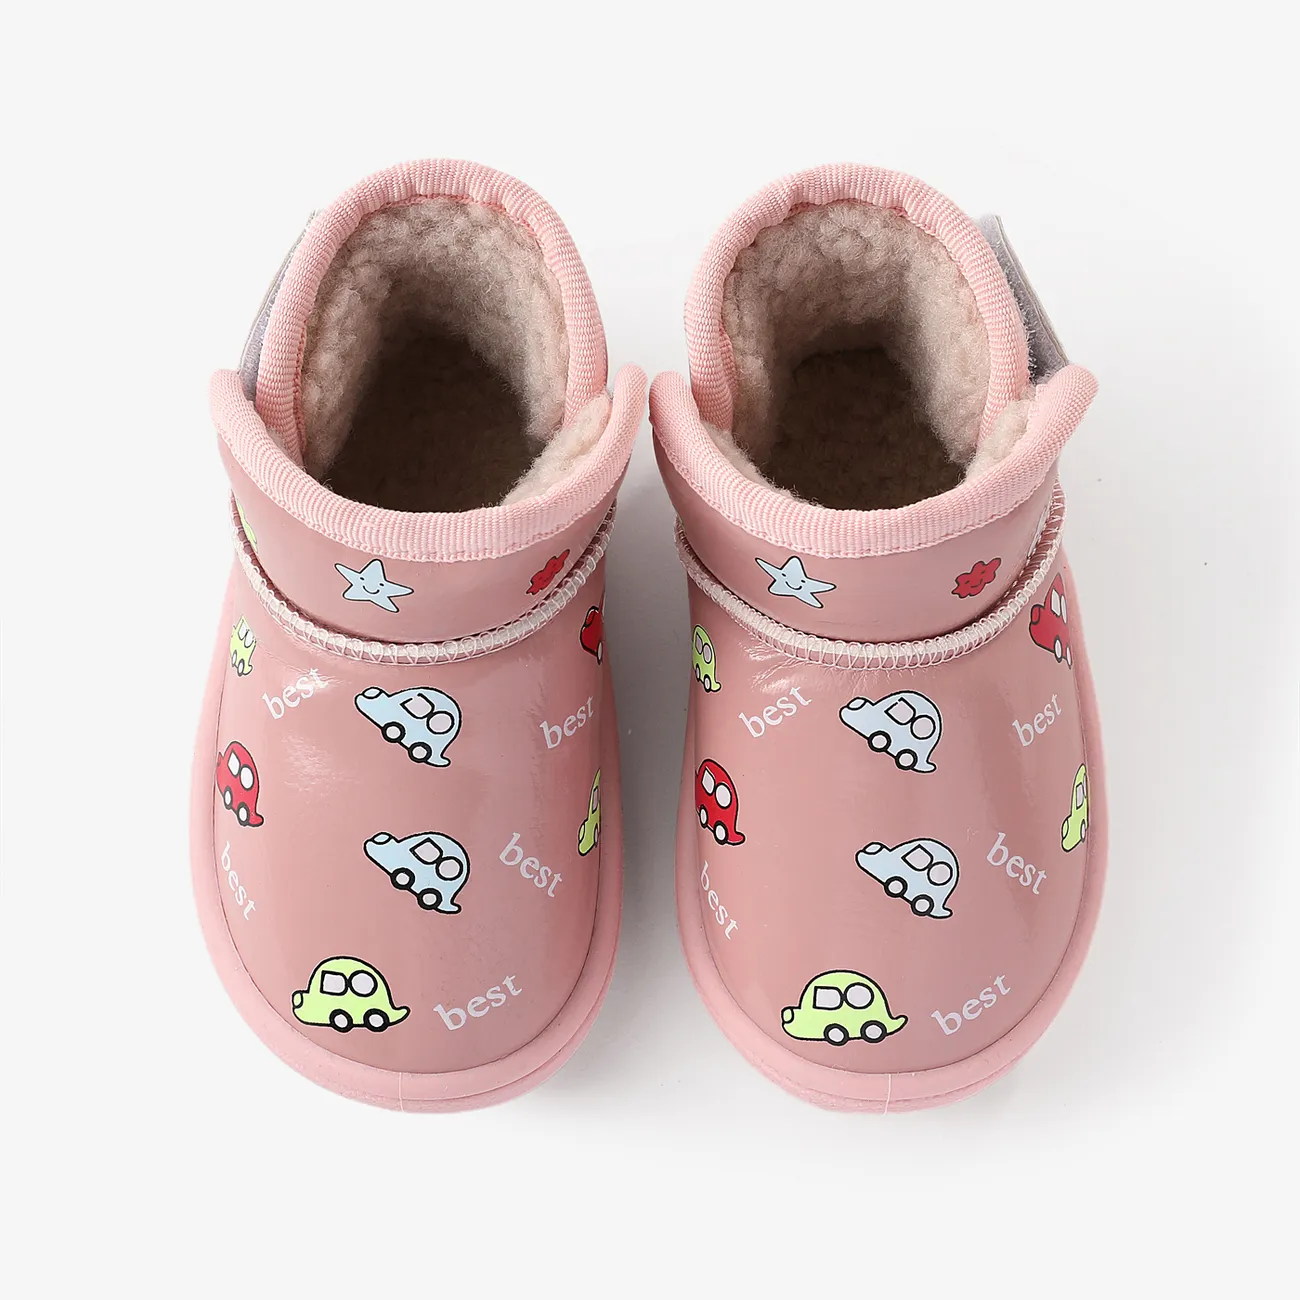 Toddler & Kids Childlike Cartoon Vehicle & Rabbit Print Fleece Snow Boots Dark Pink big image 1